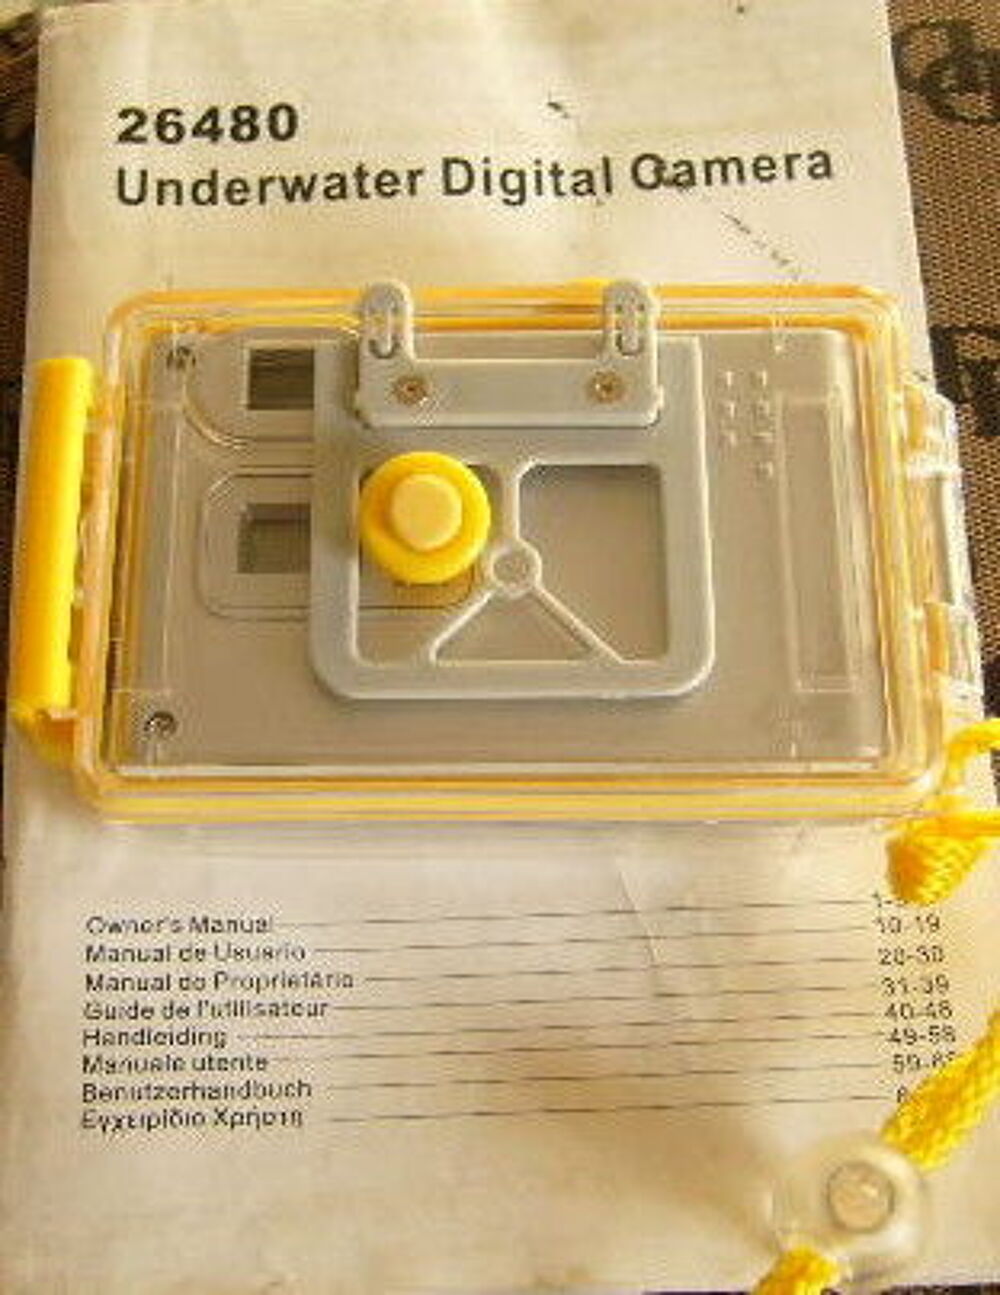 appareil photo digital camera underwater 26480 neuf Photos/Video/TV